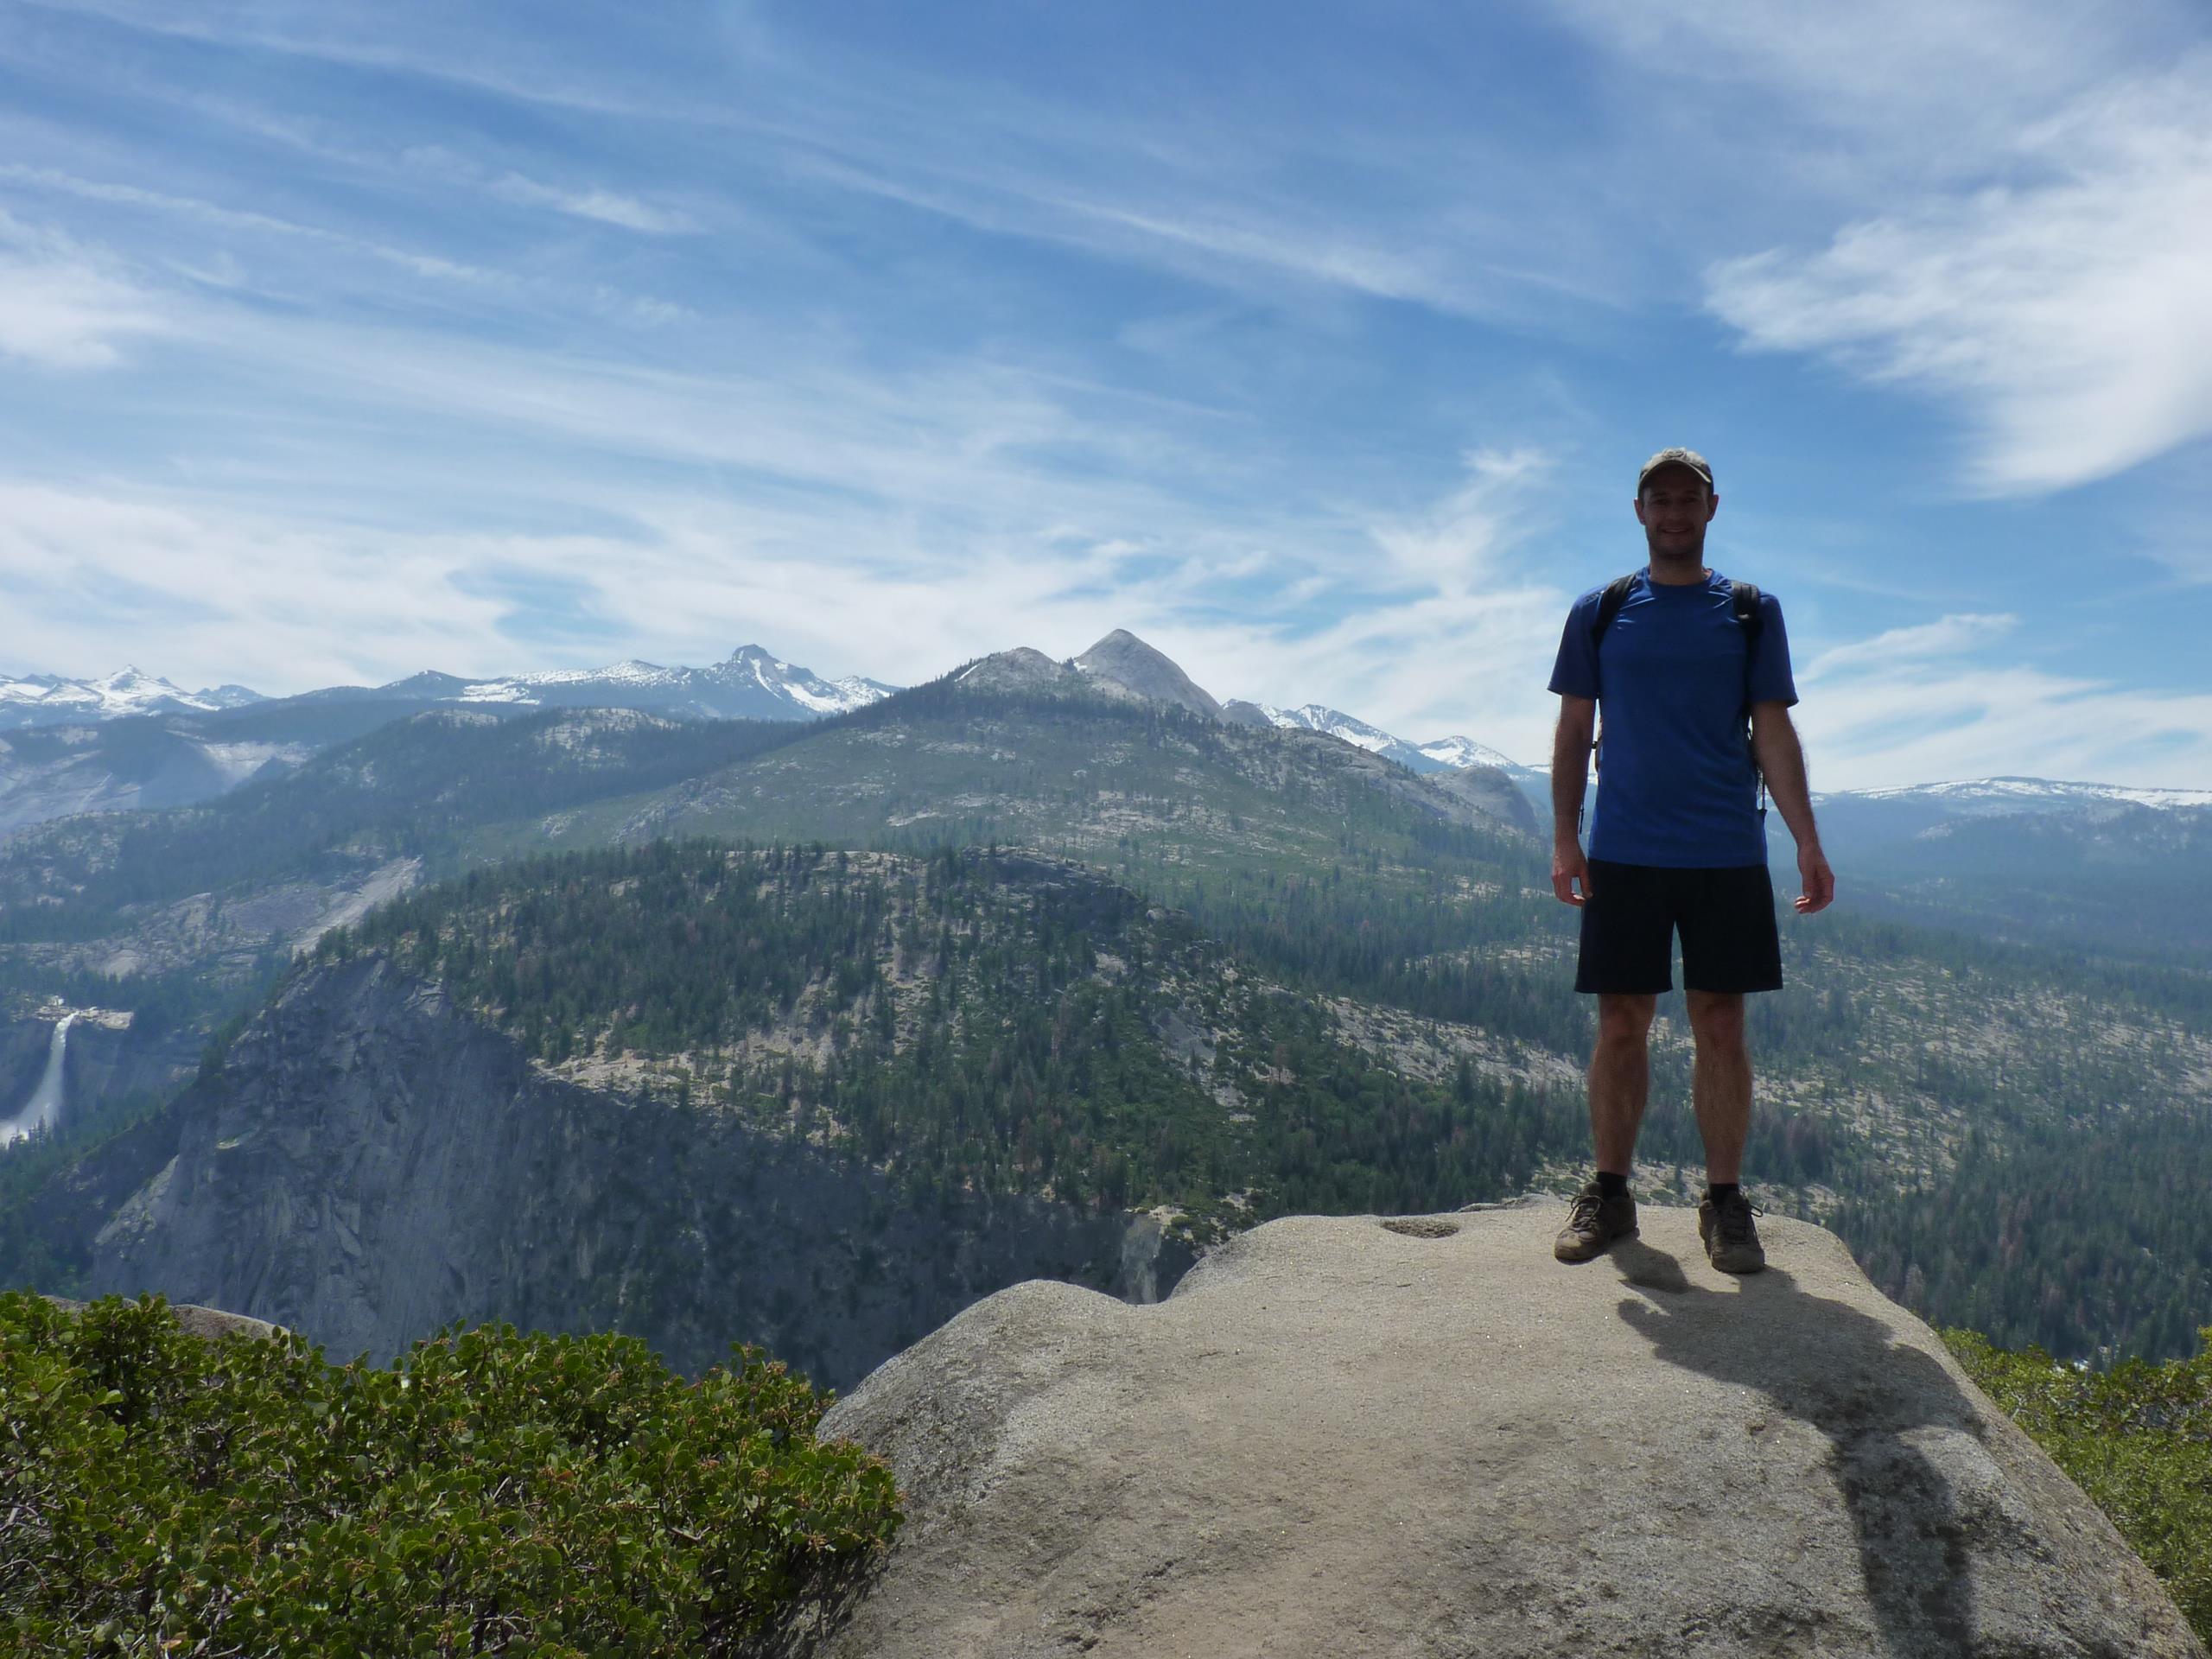 Martyn hiking in Yosemite National Park, USA